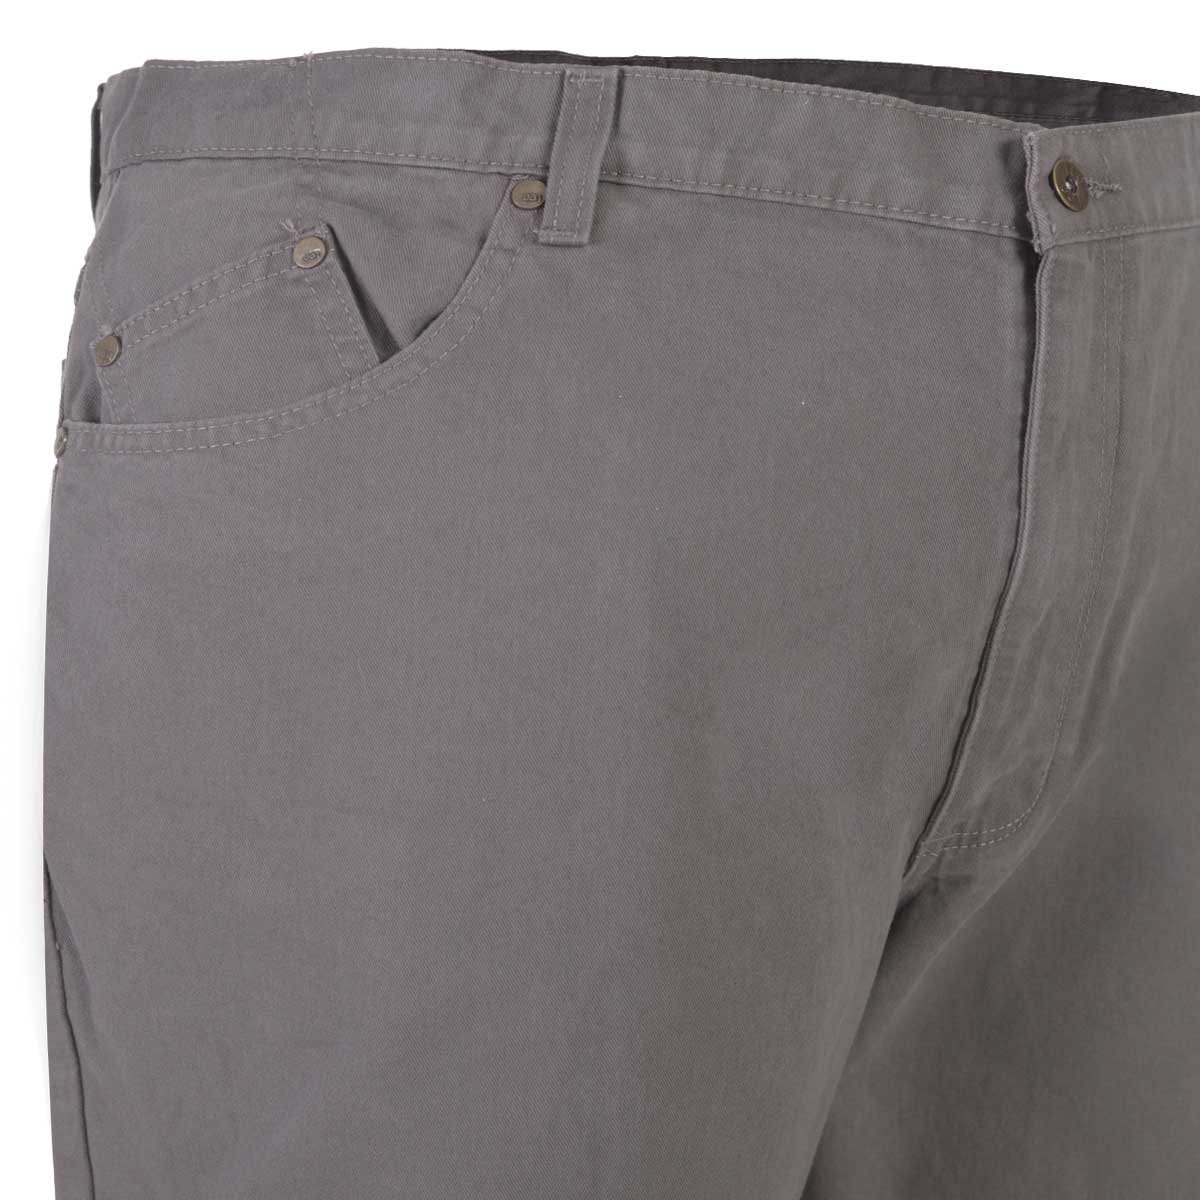 Pantalón 5 Pockets Lee Plus